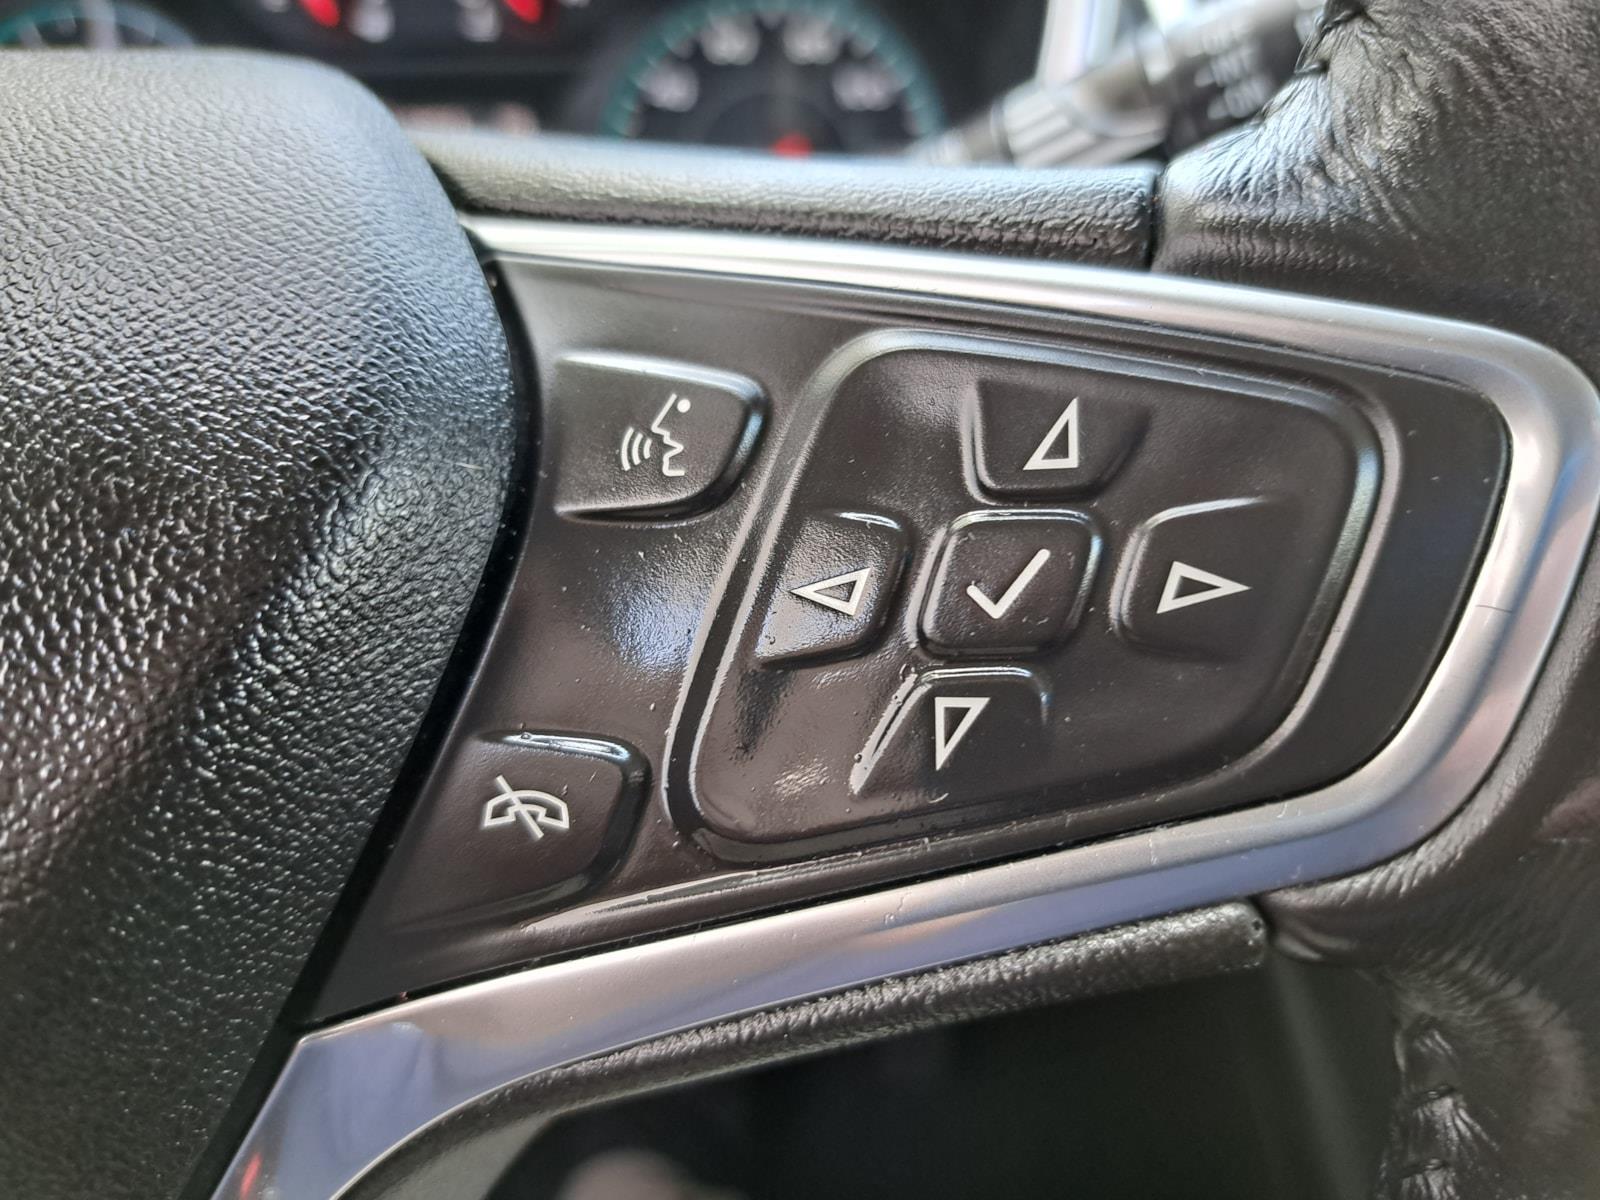 2018 Chevrolet Equinox LT SUV Front Wheel Drive 17